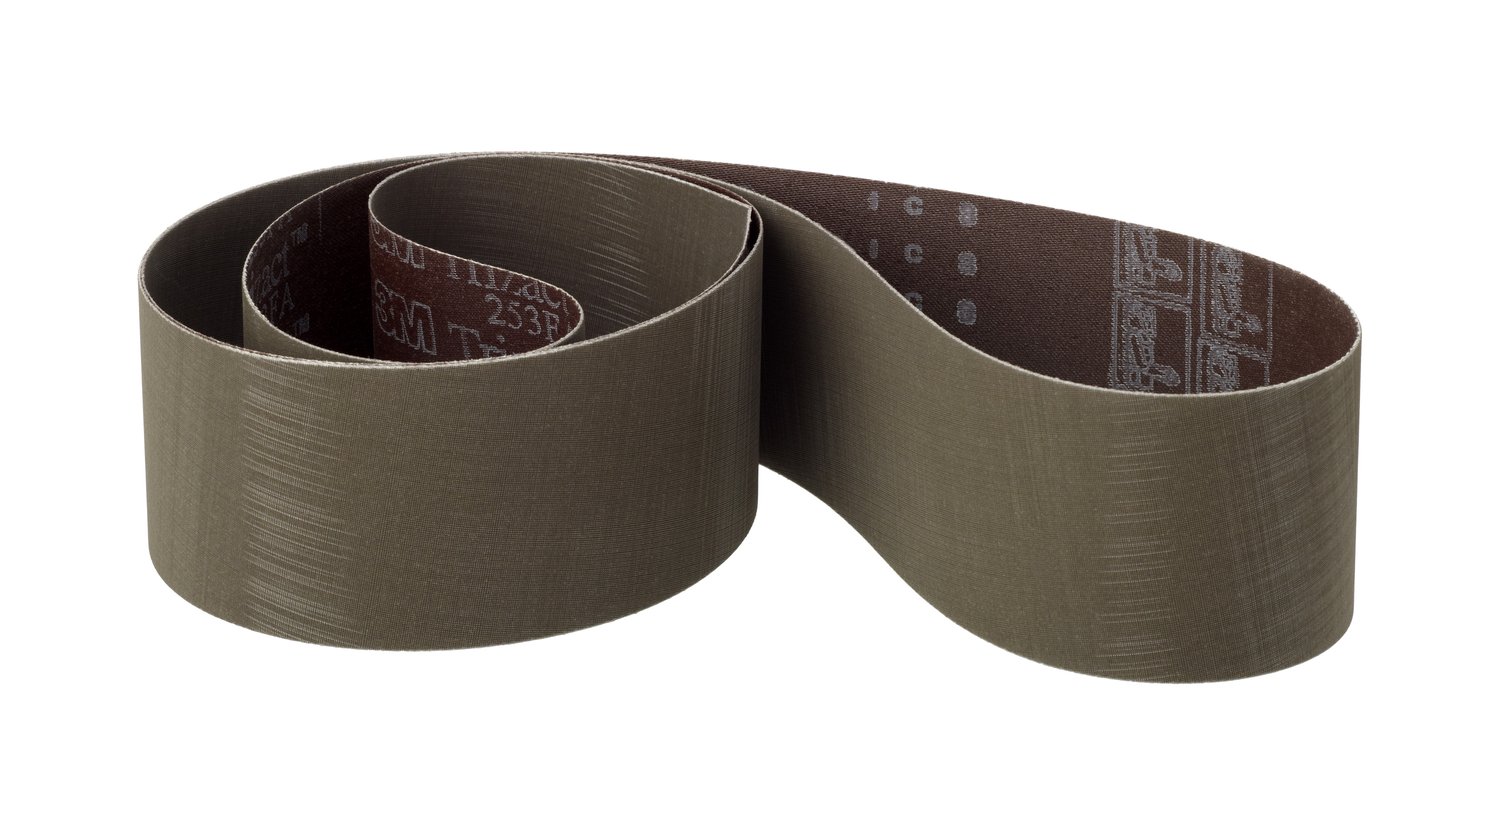 7010512998 - 3M Trizact Cloth Belt 253FA, A6 XF-weight, 1-1/2 in x 299 in,
Film-lok, Single-flex